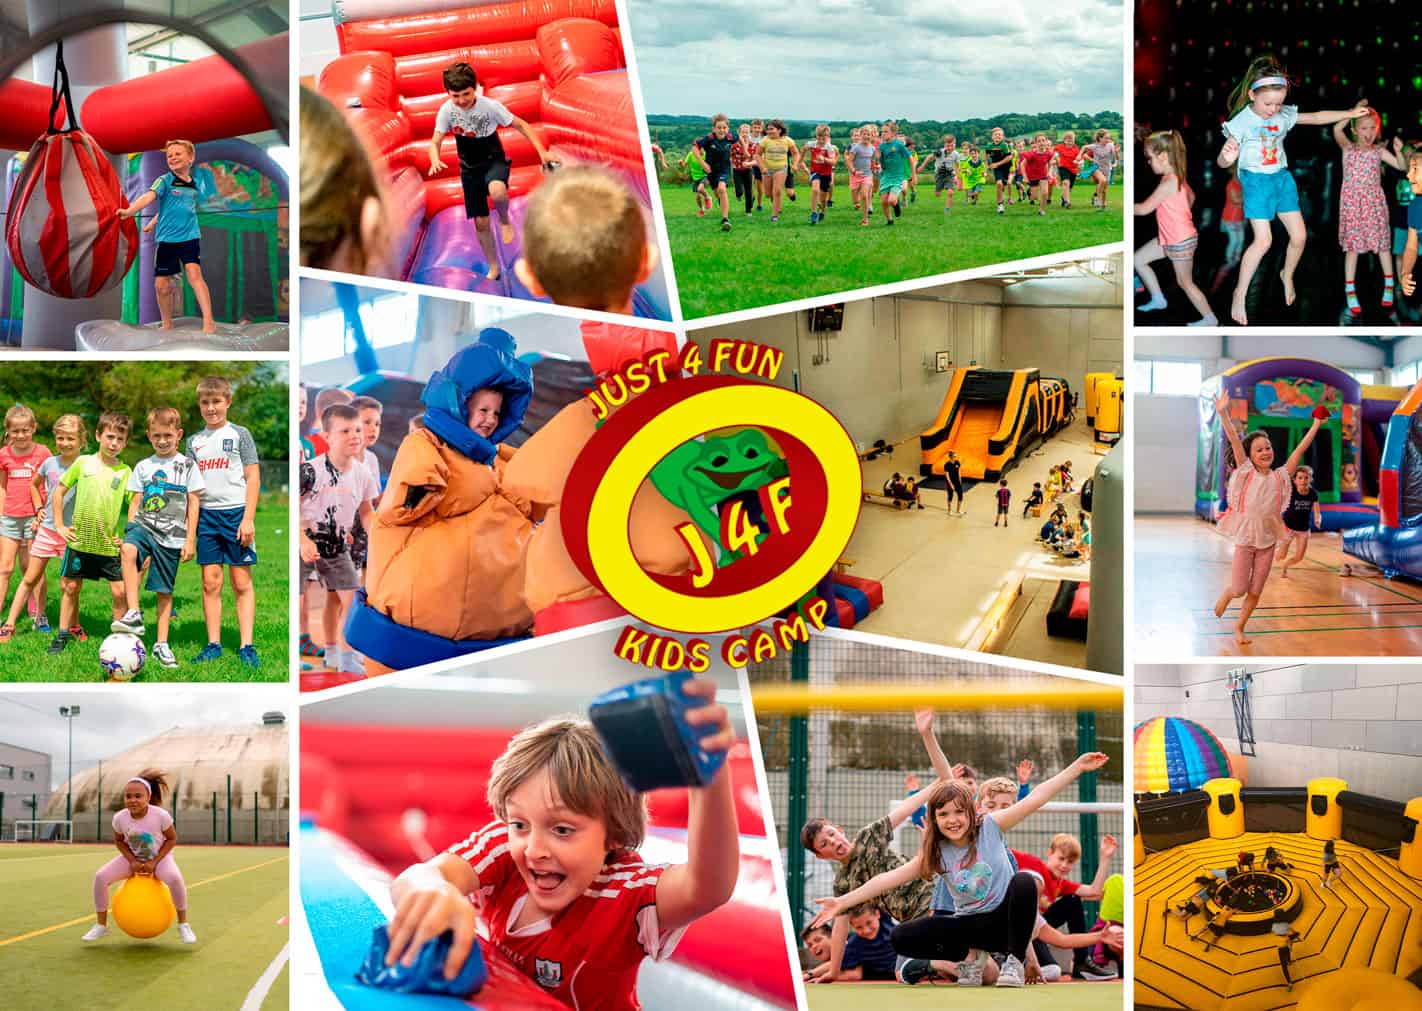 Summer camps in Munster - just 4 fun kids camp